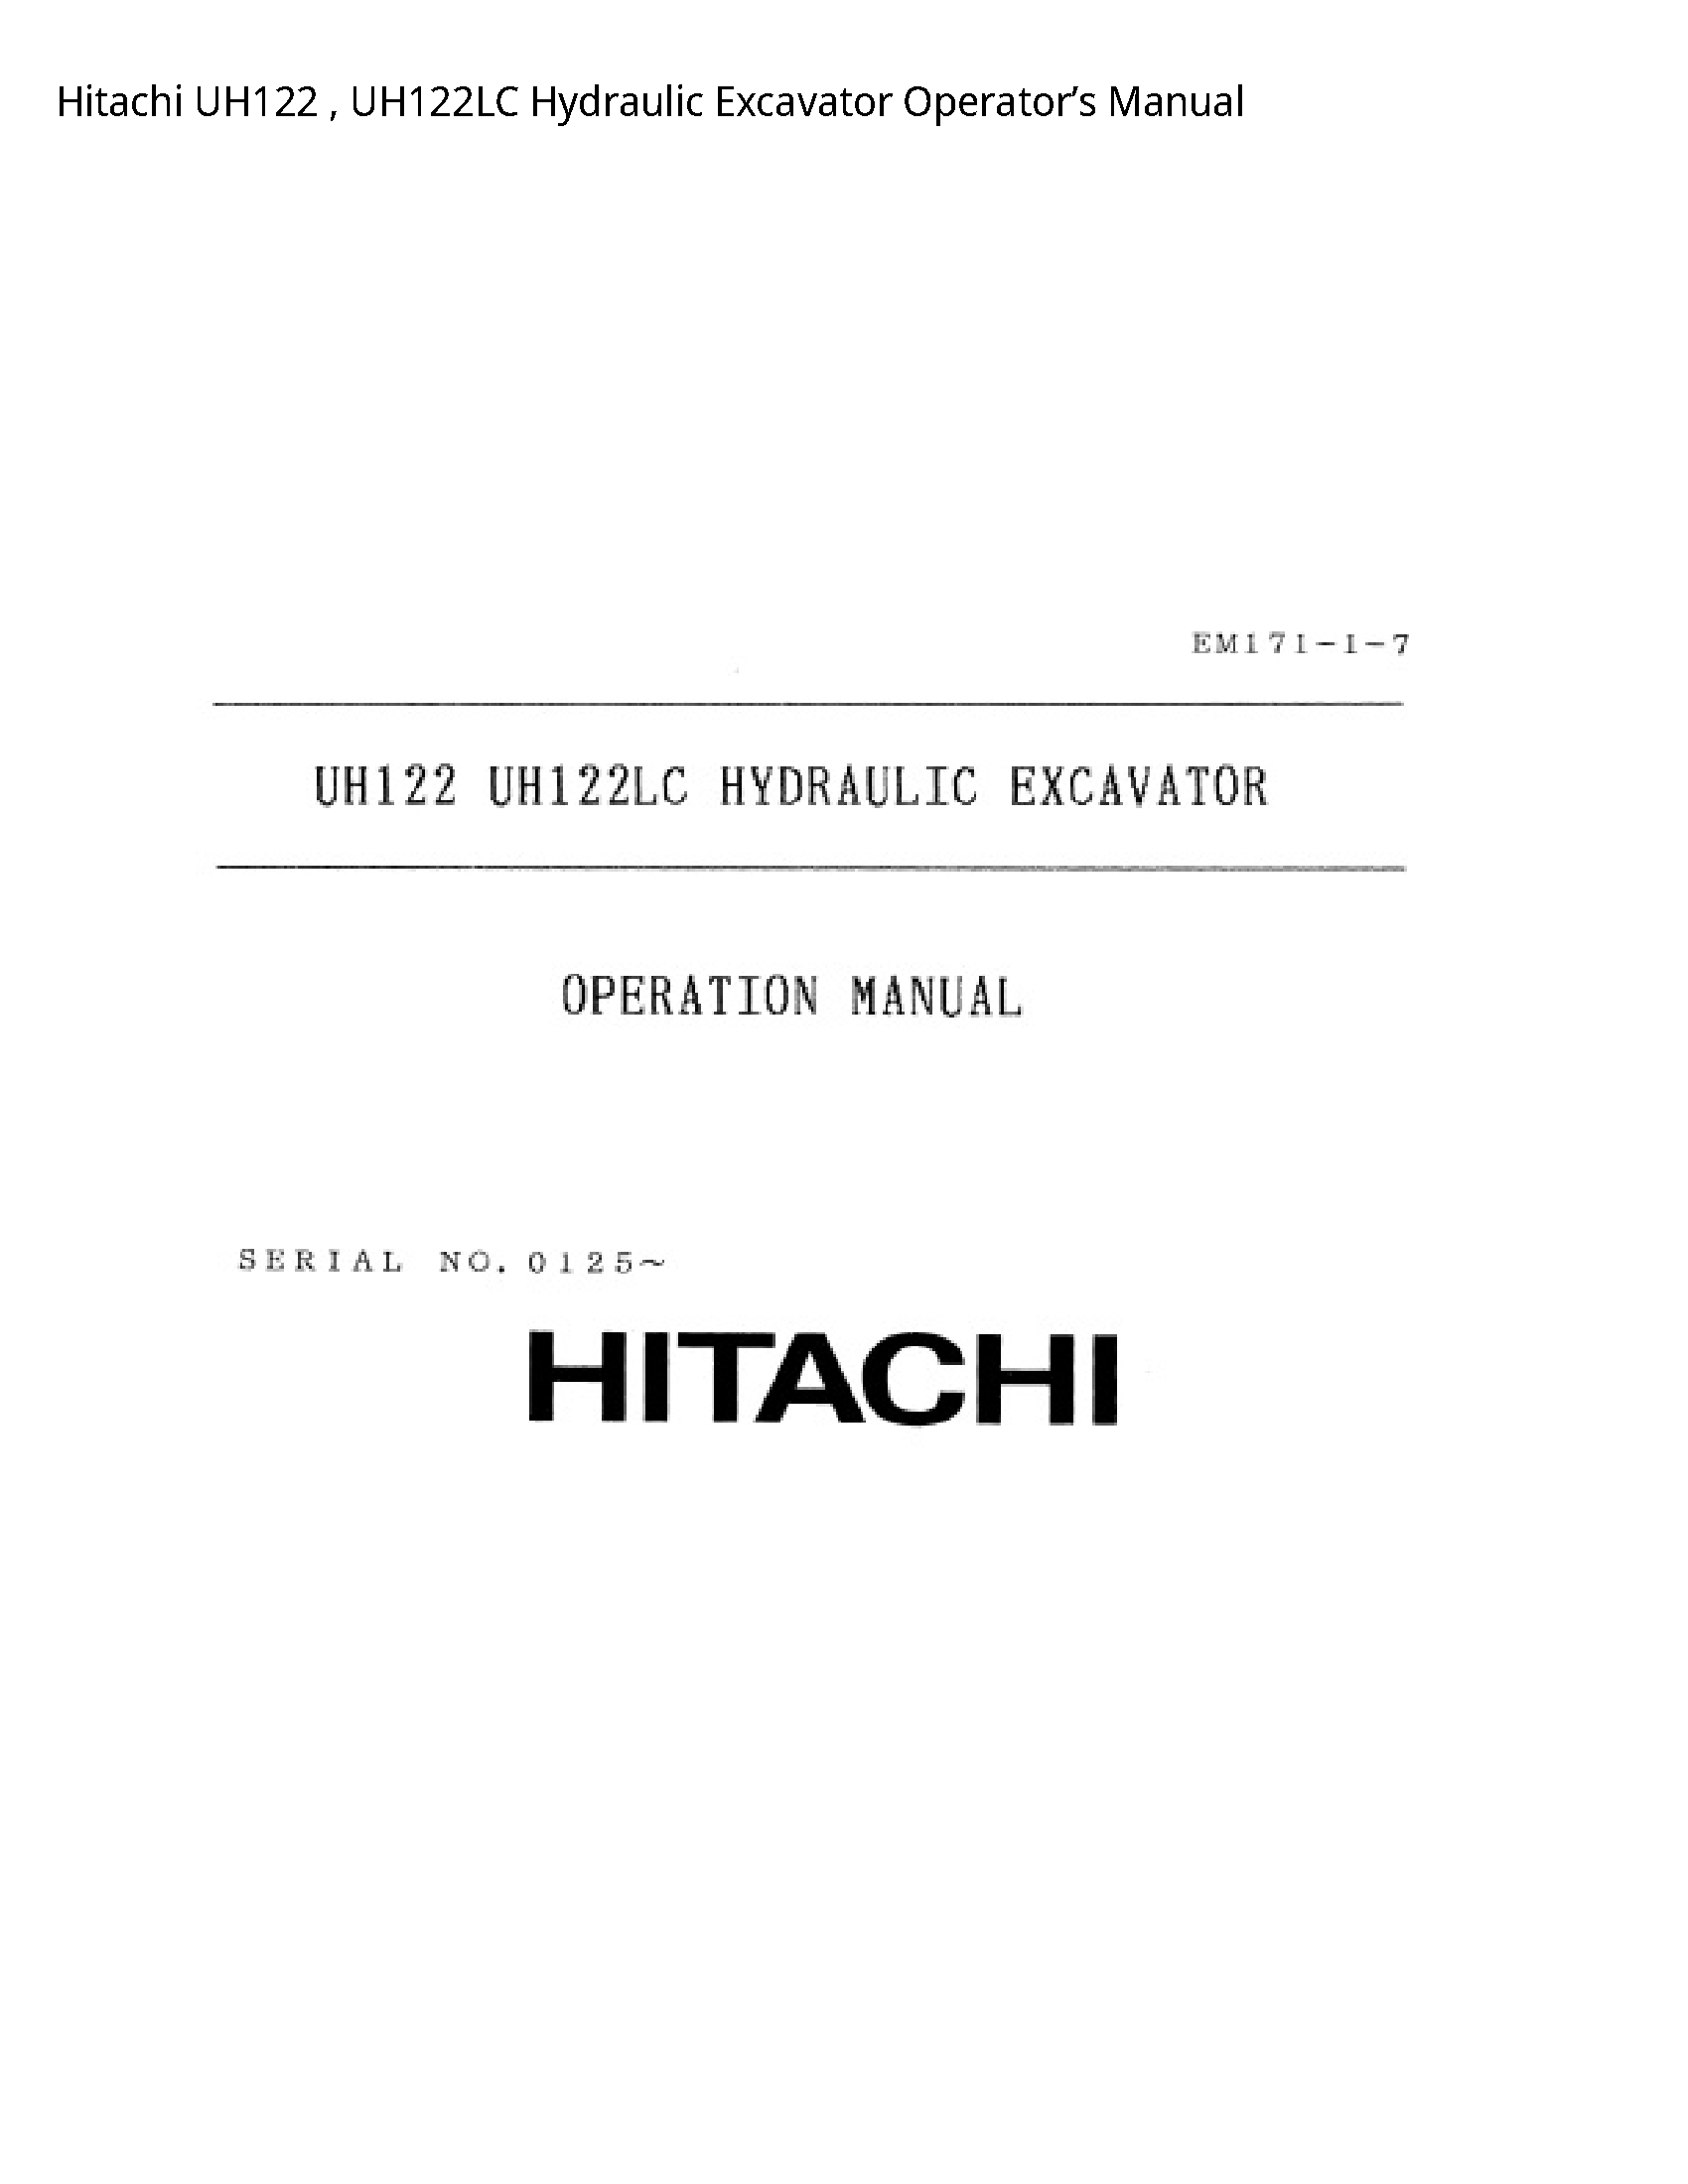 Hitachi UH122 Hydraulic Excavator Operator’s manual